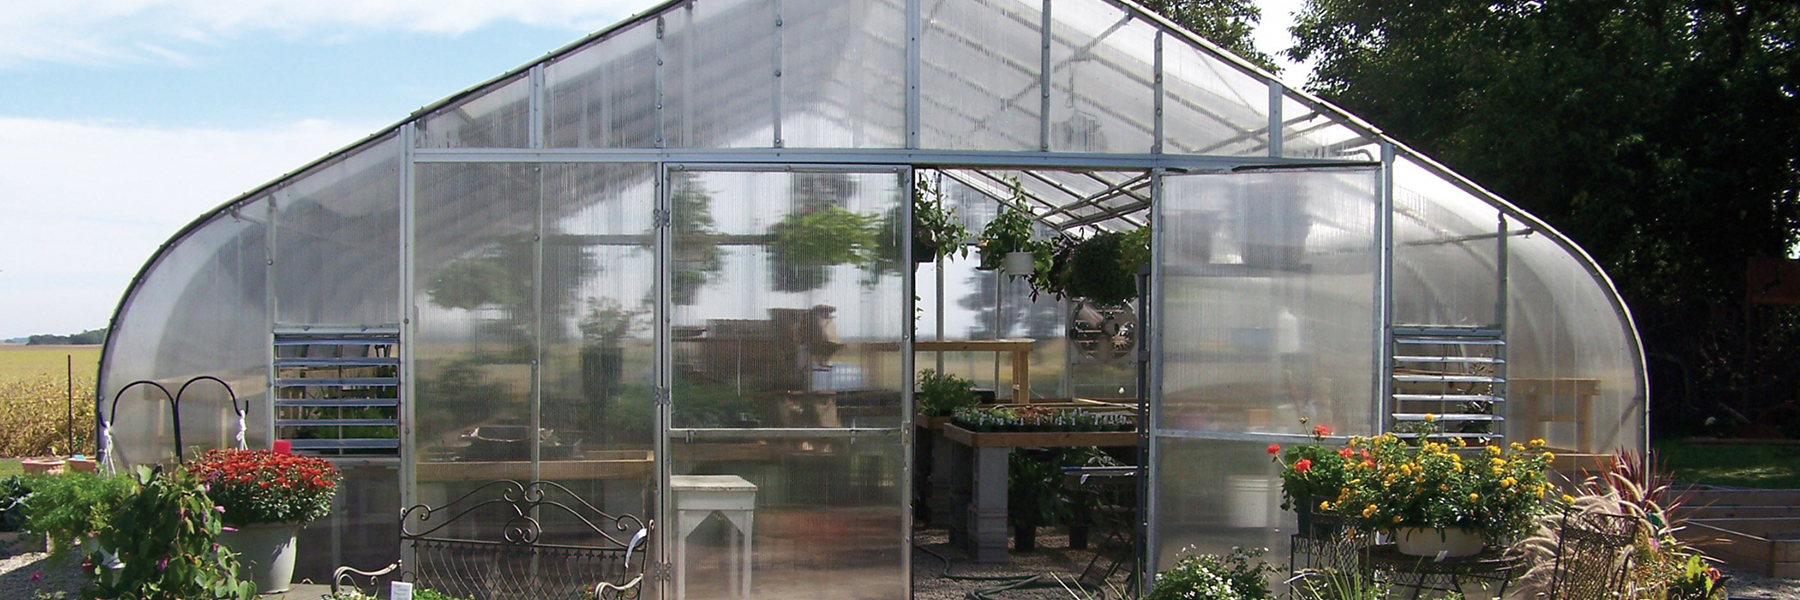 backyard flower greenhouse